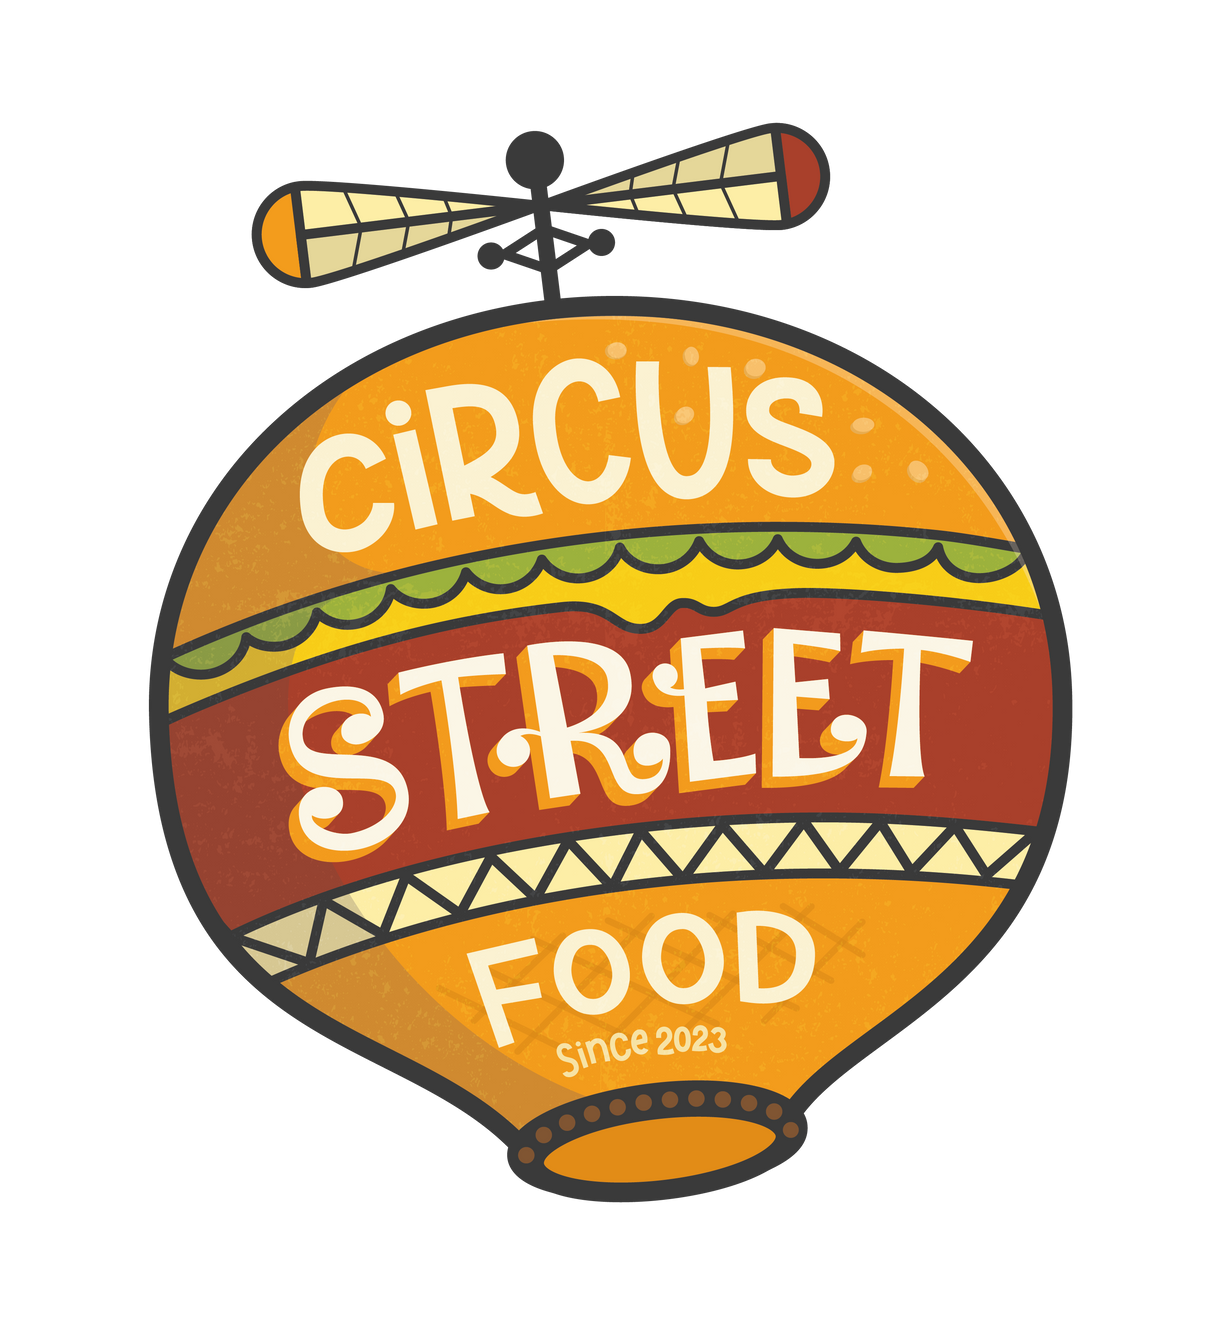 Food Truck Circus Street Food